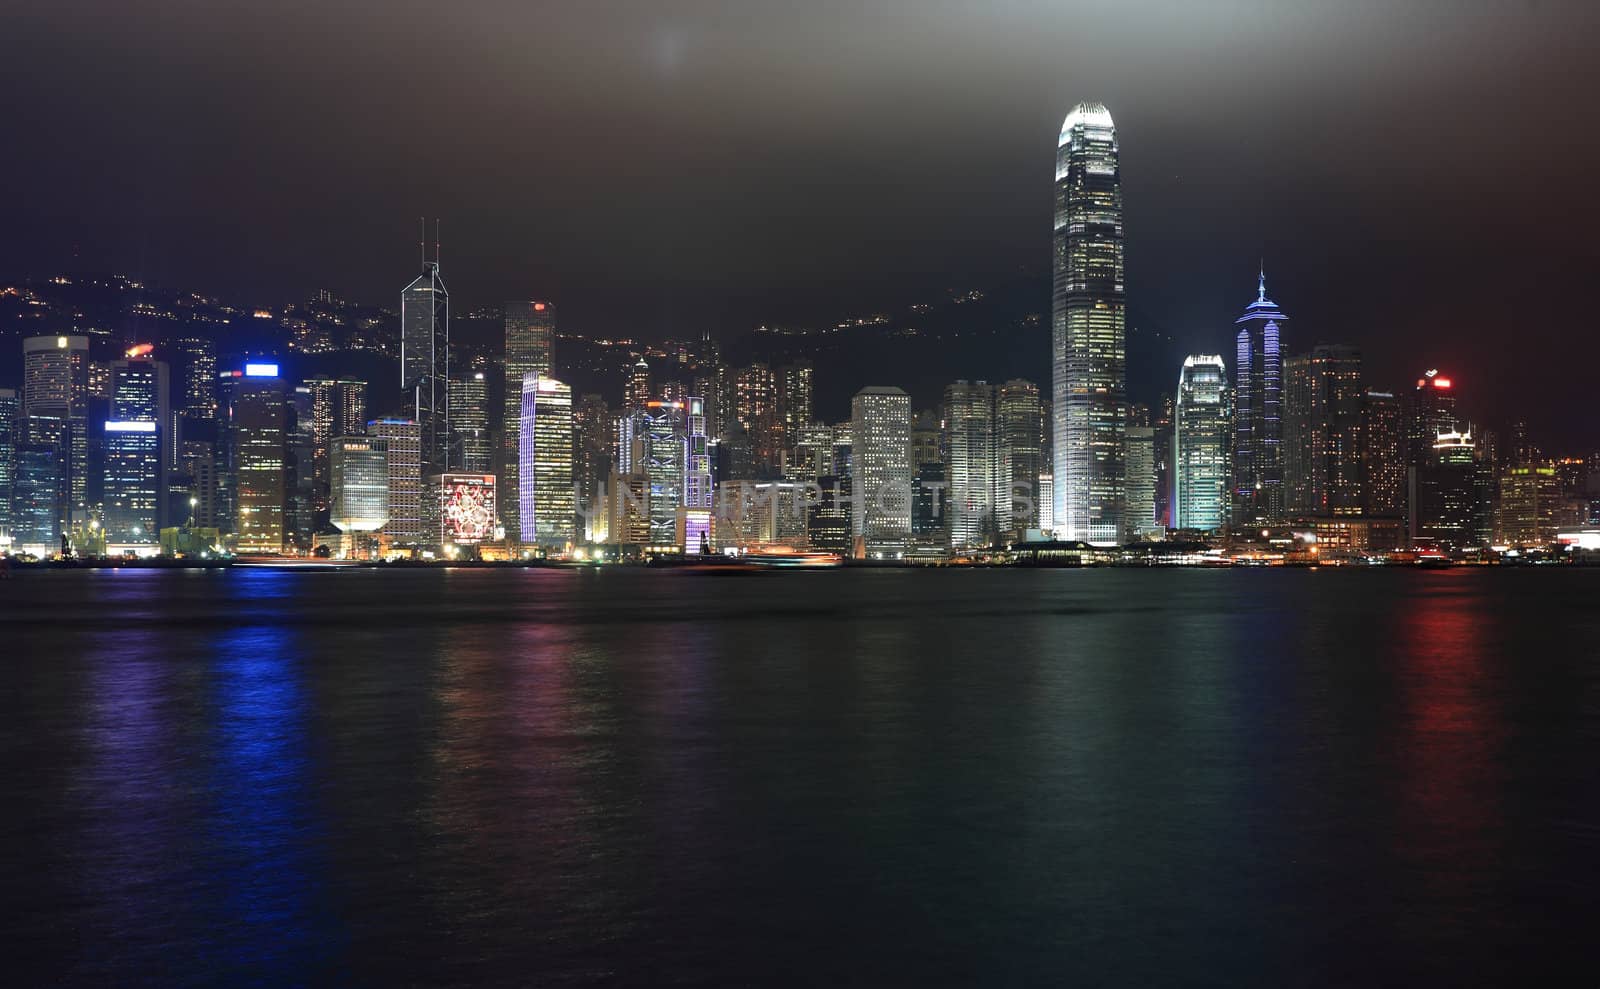 Hong Kong night by leungchopan